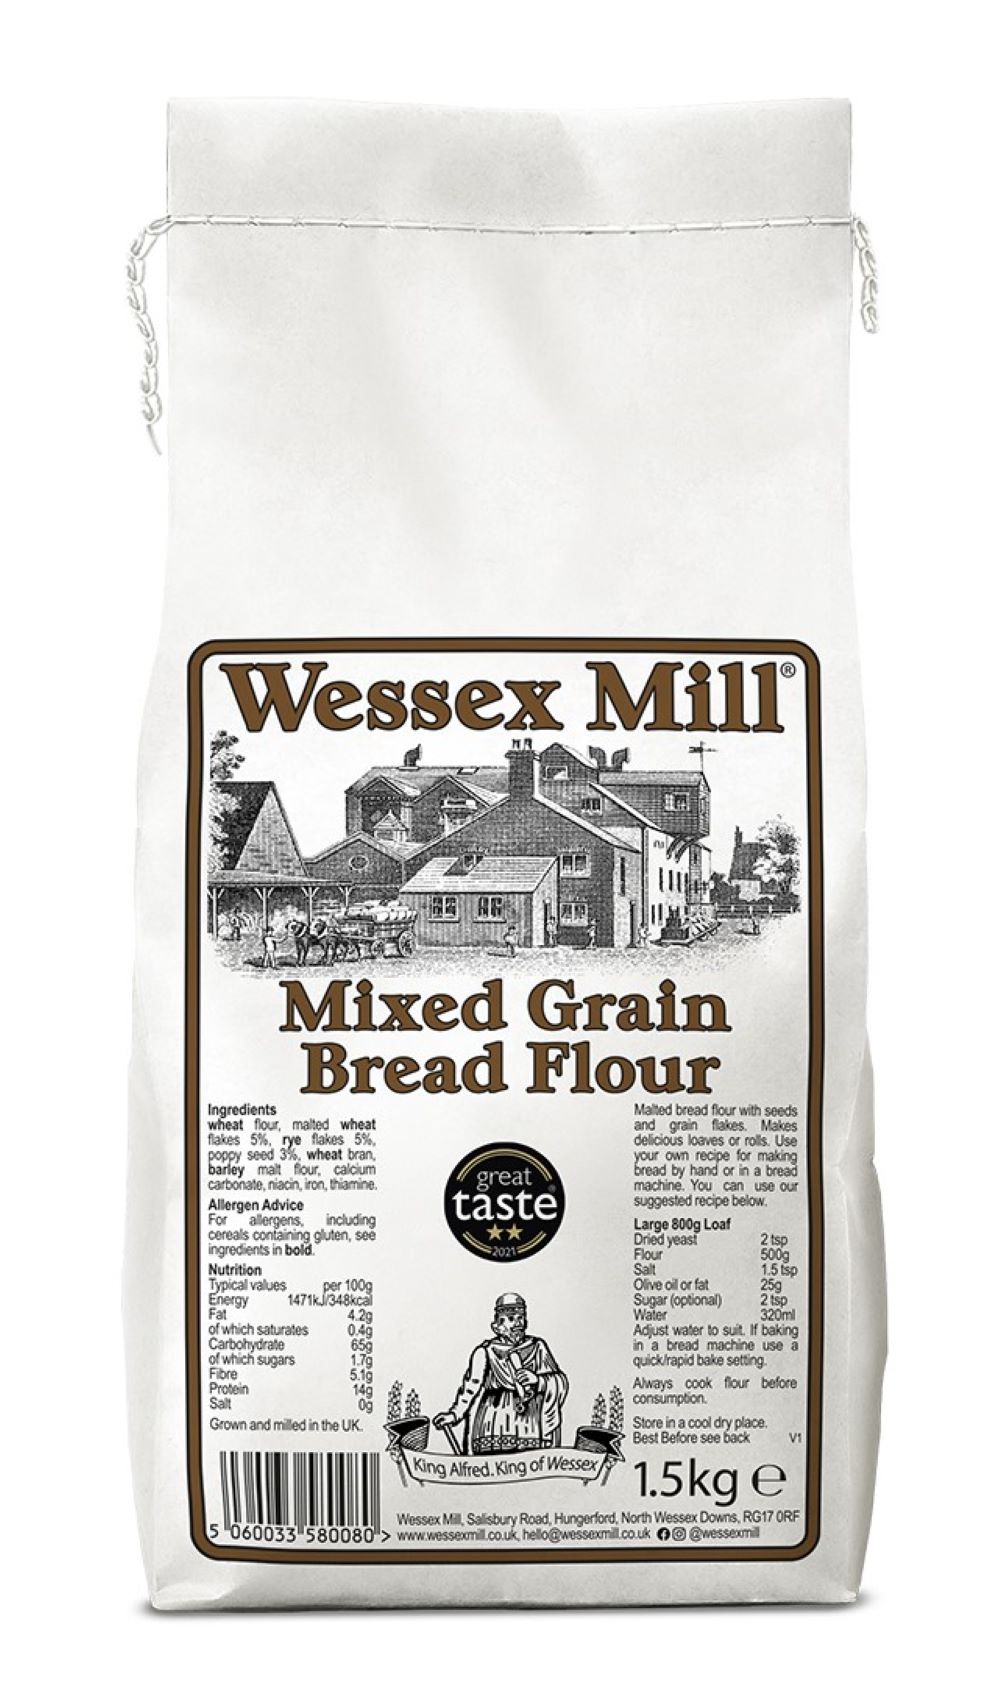 Mixed Grain Bread Flour